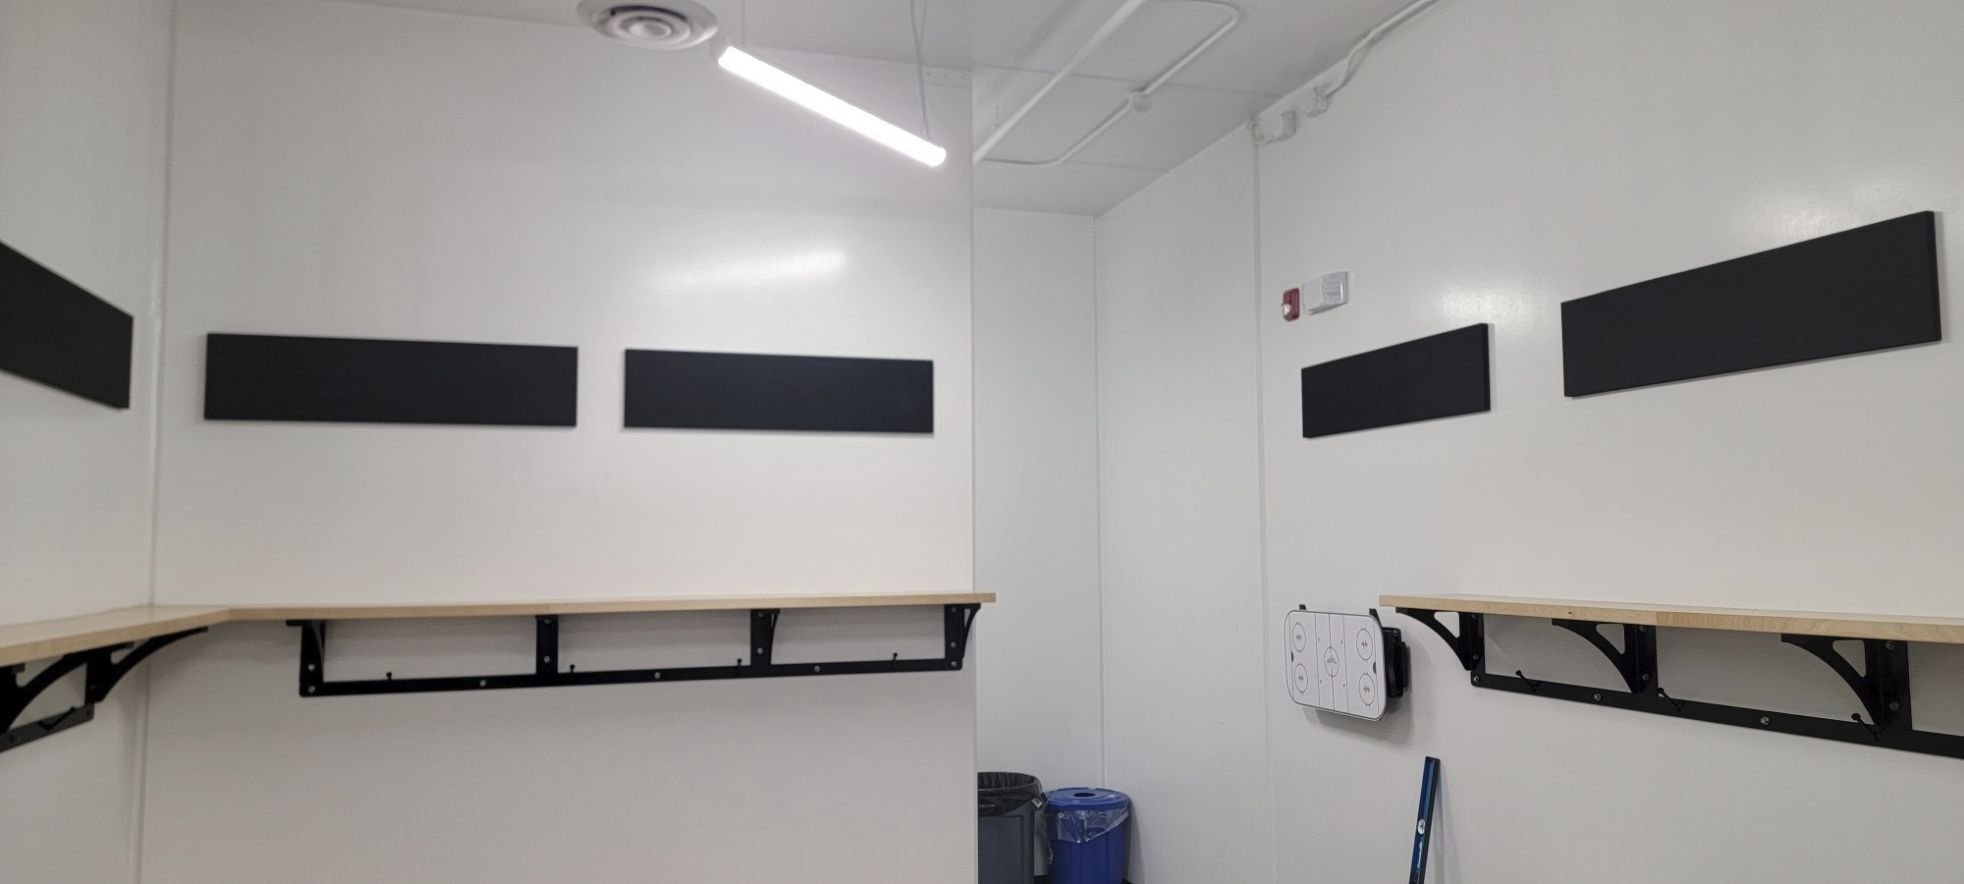 Echofelt+ Panels in Silent Ice Change Room - Nisku, Alberta 3.jpg